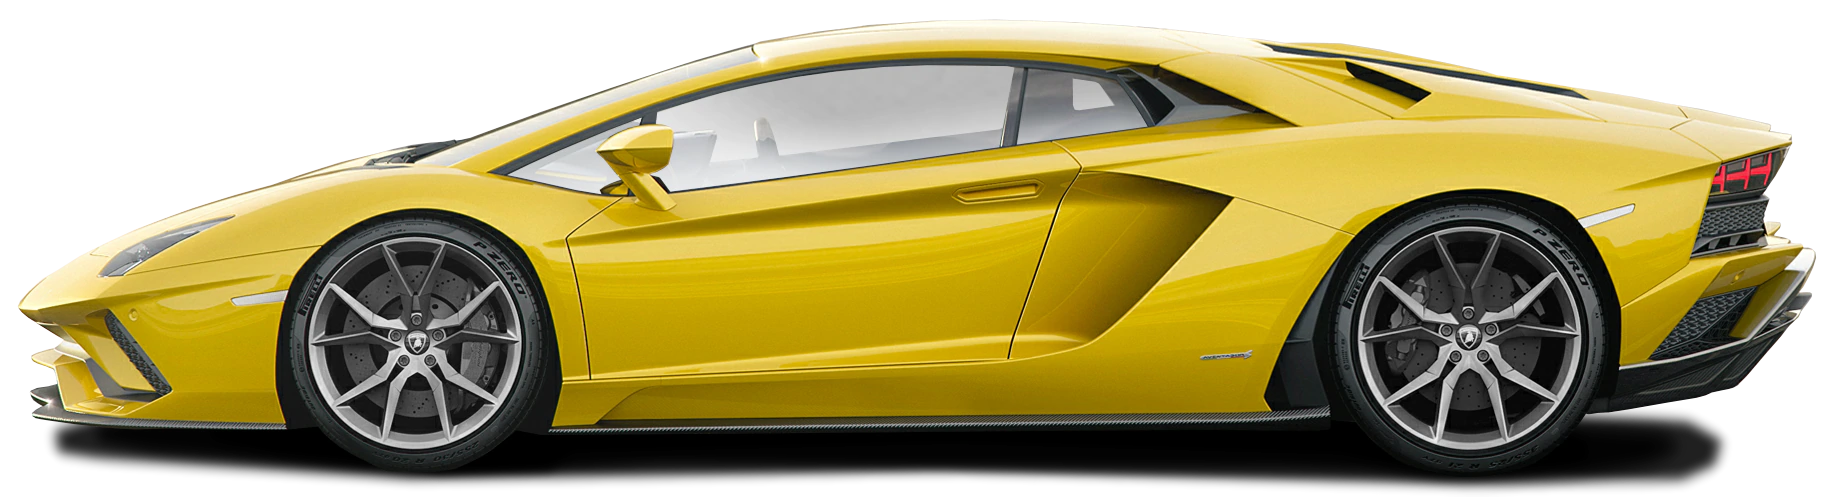 Colorful Vista lateral Lamborghini PNG Imagen